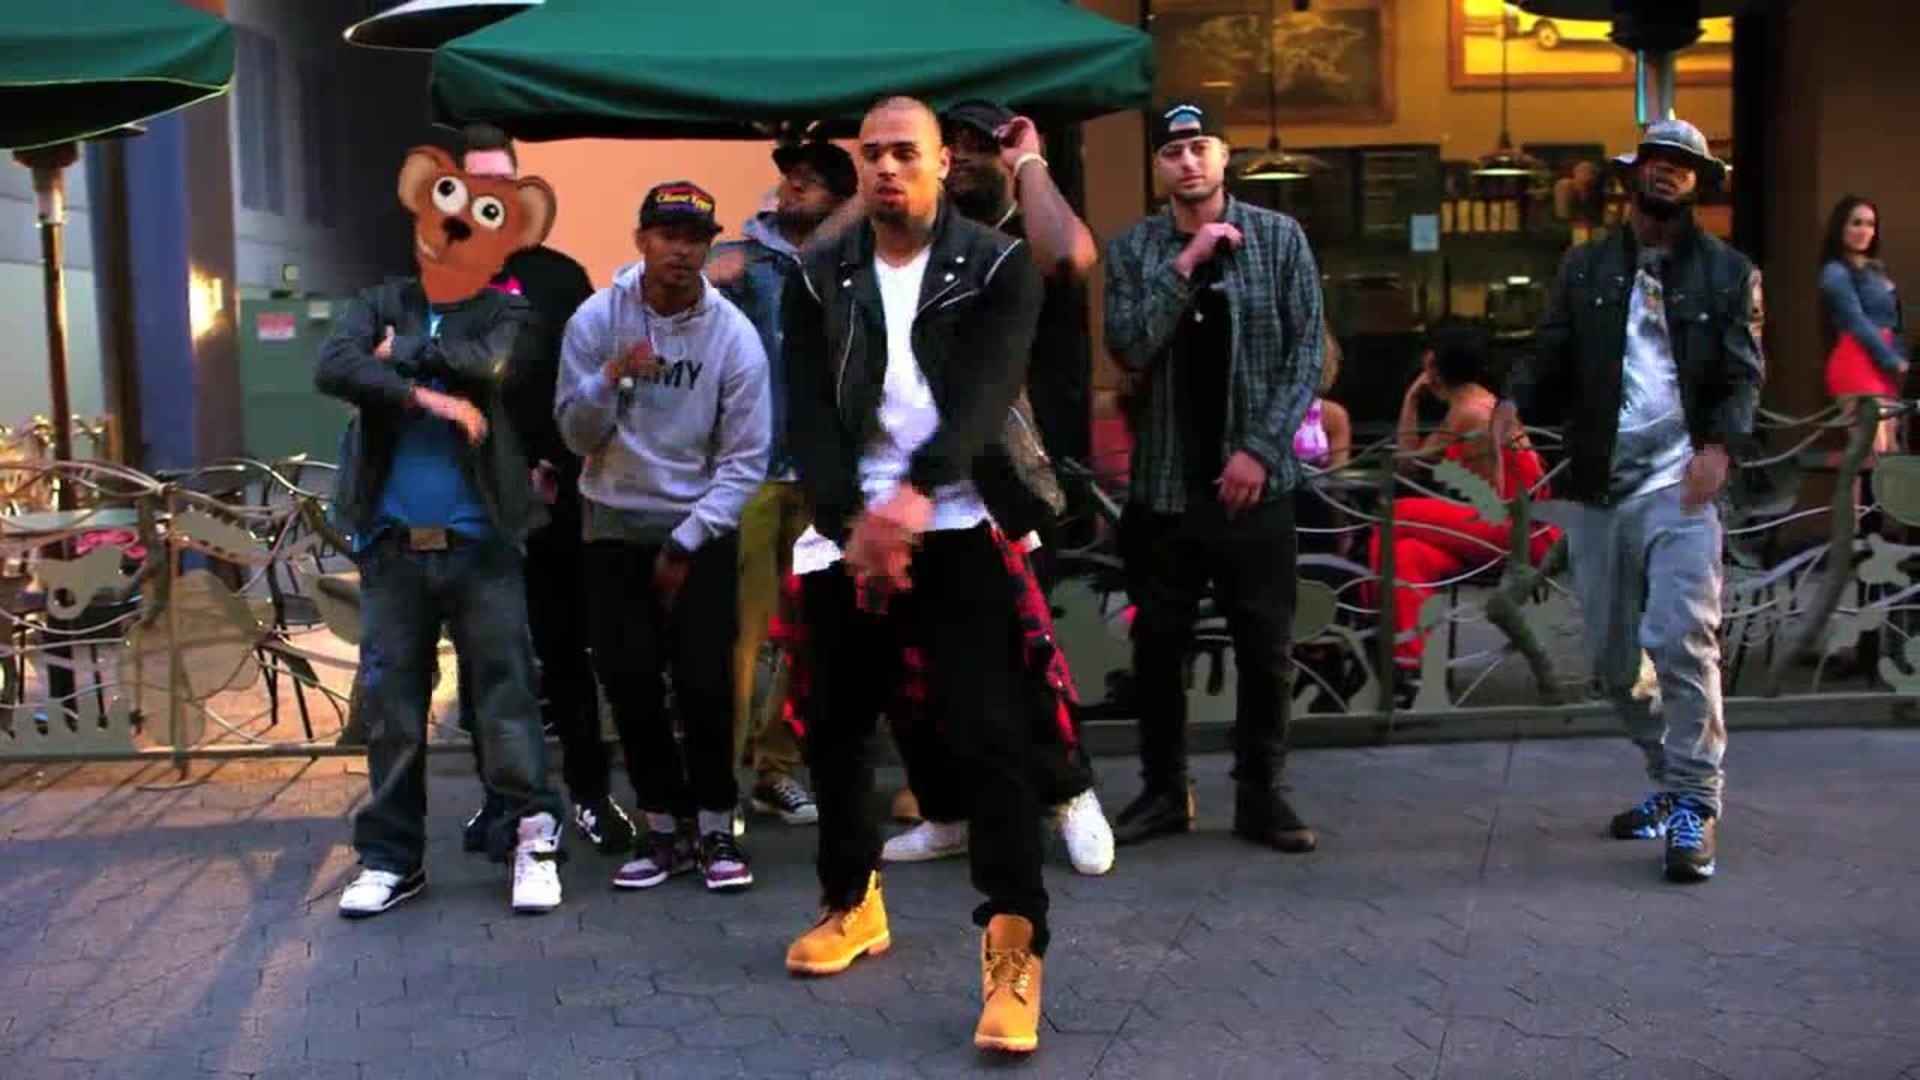 1920x1080 Chris Brown ft. Lil Wayne, Tyga - Loyal Video by Vinay Kukreti on Myspace